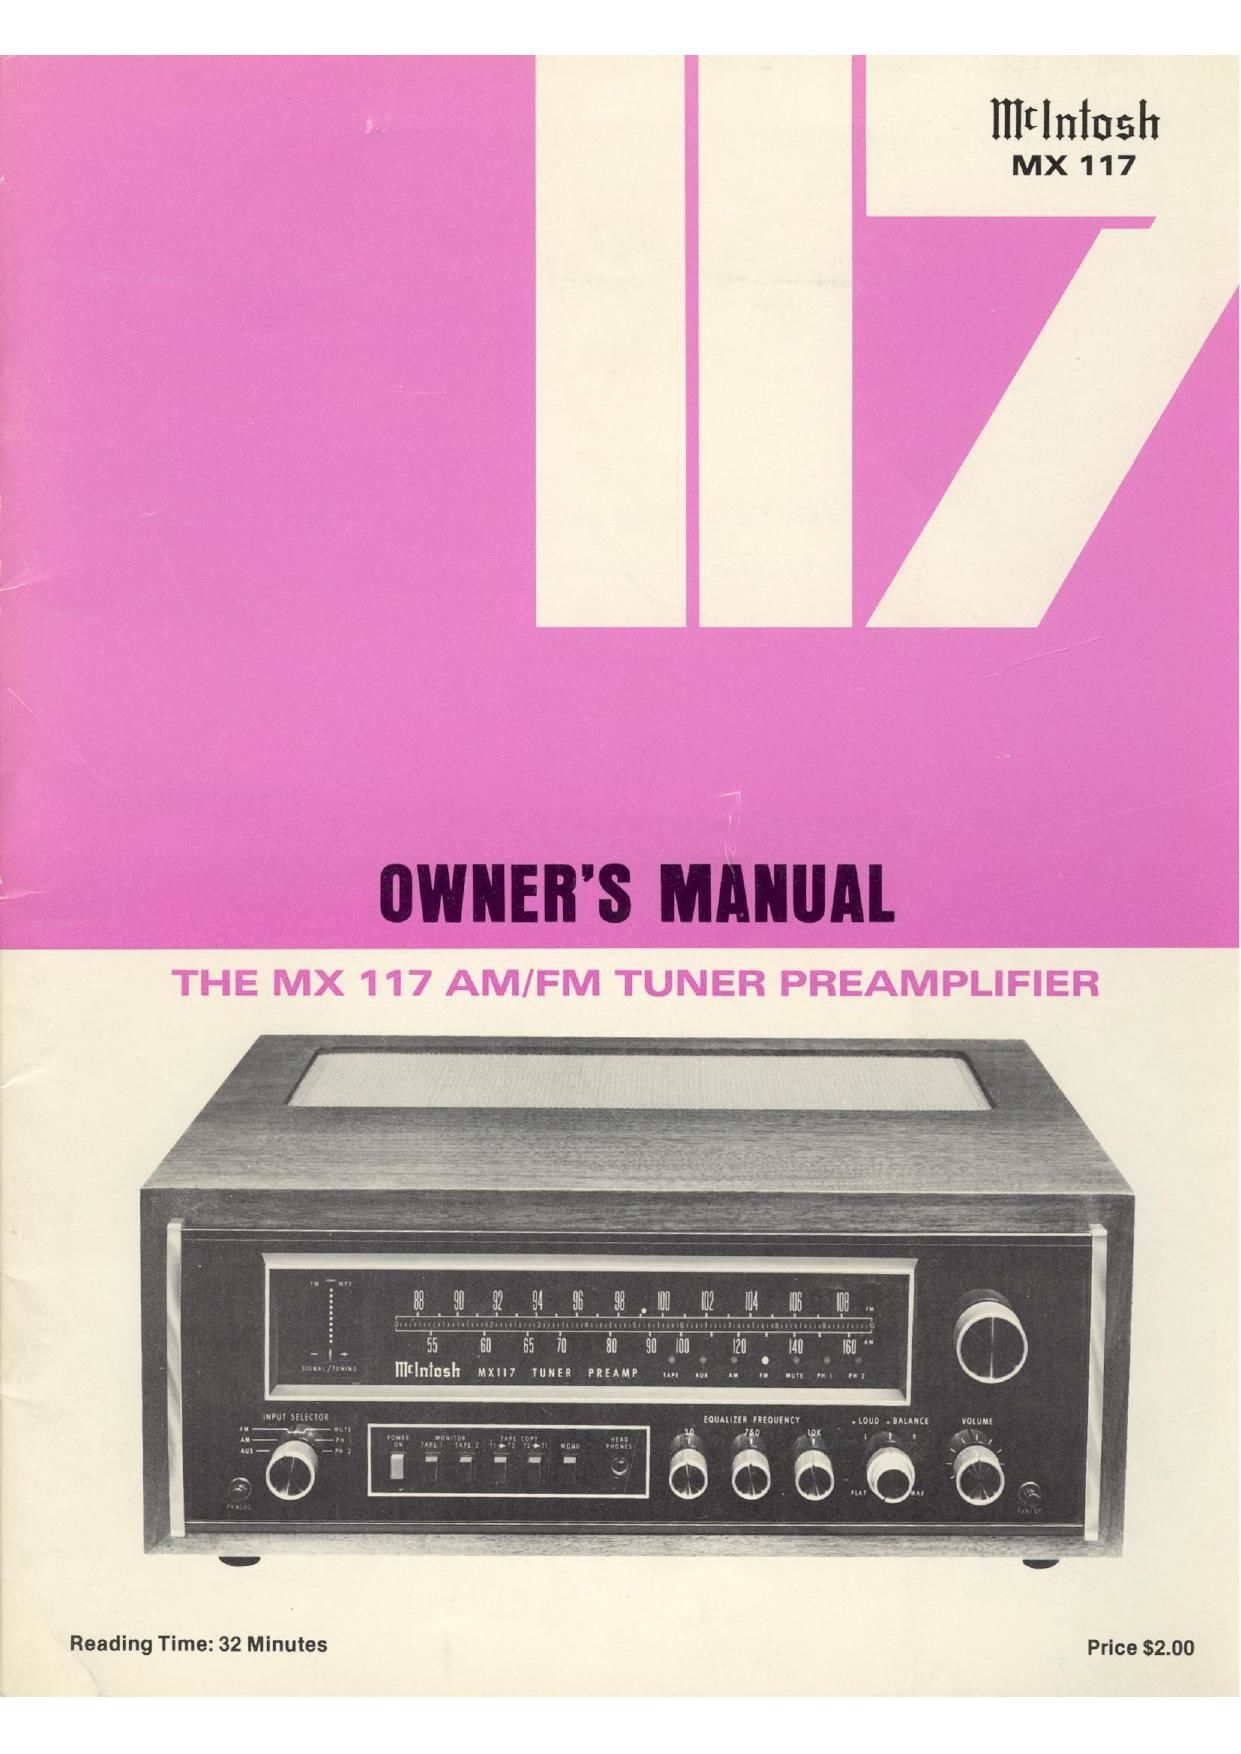 McIntosh MX 117 Owners Manual